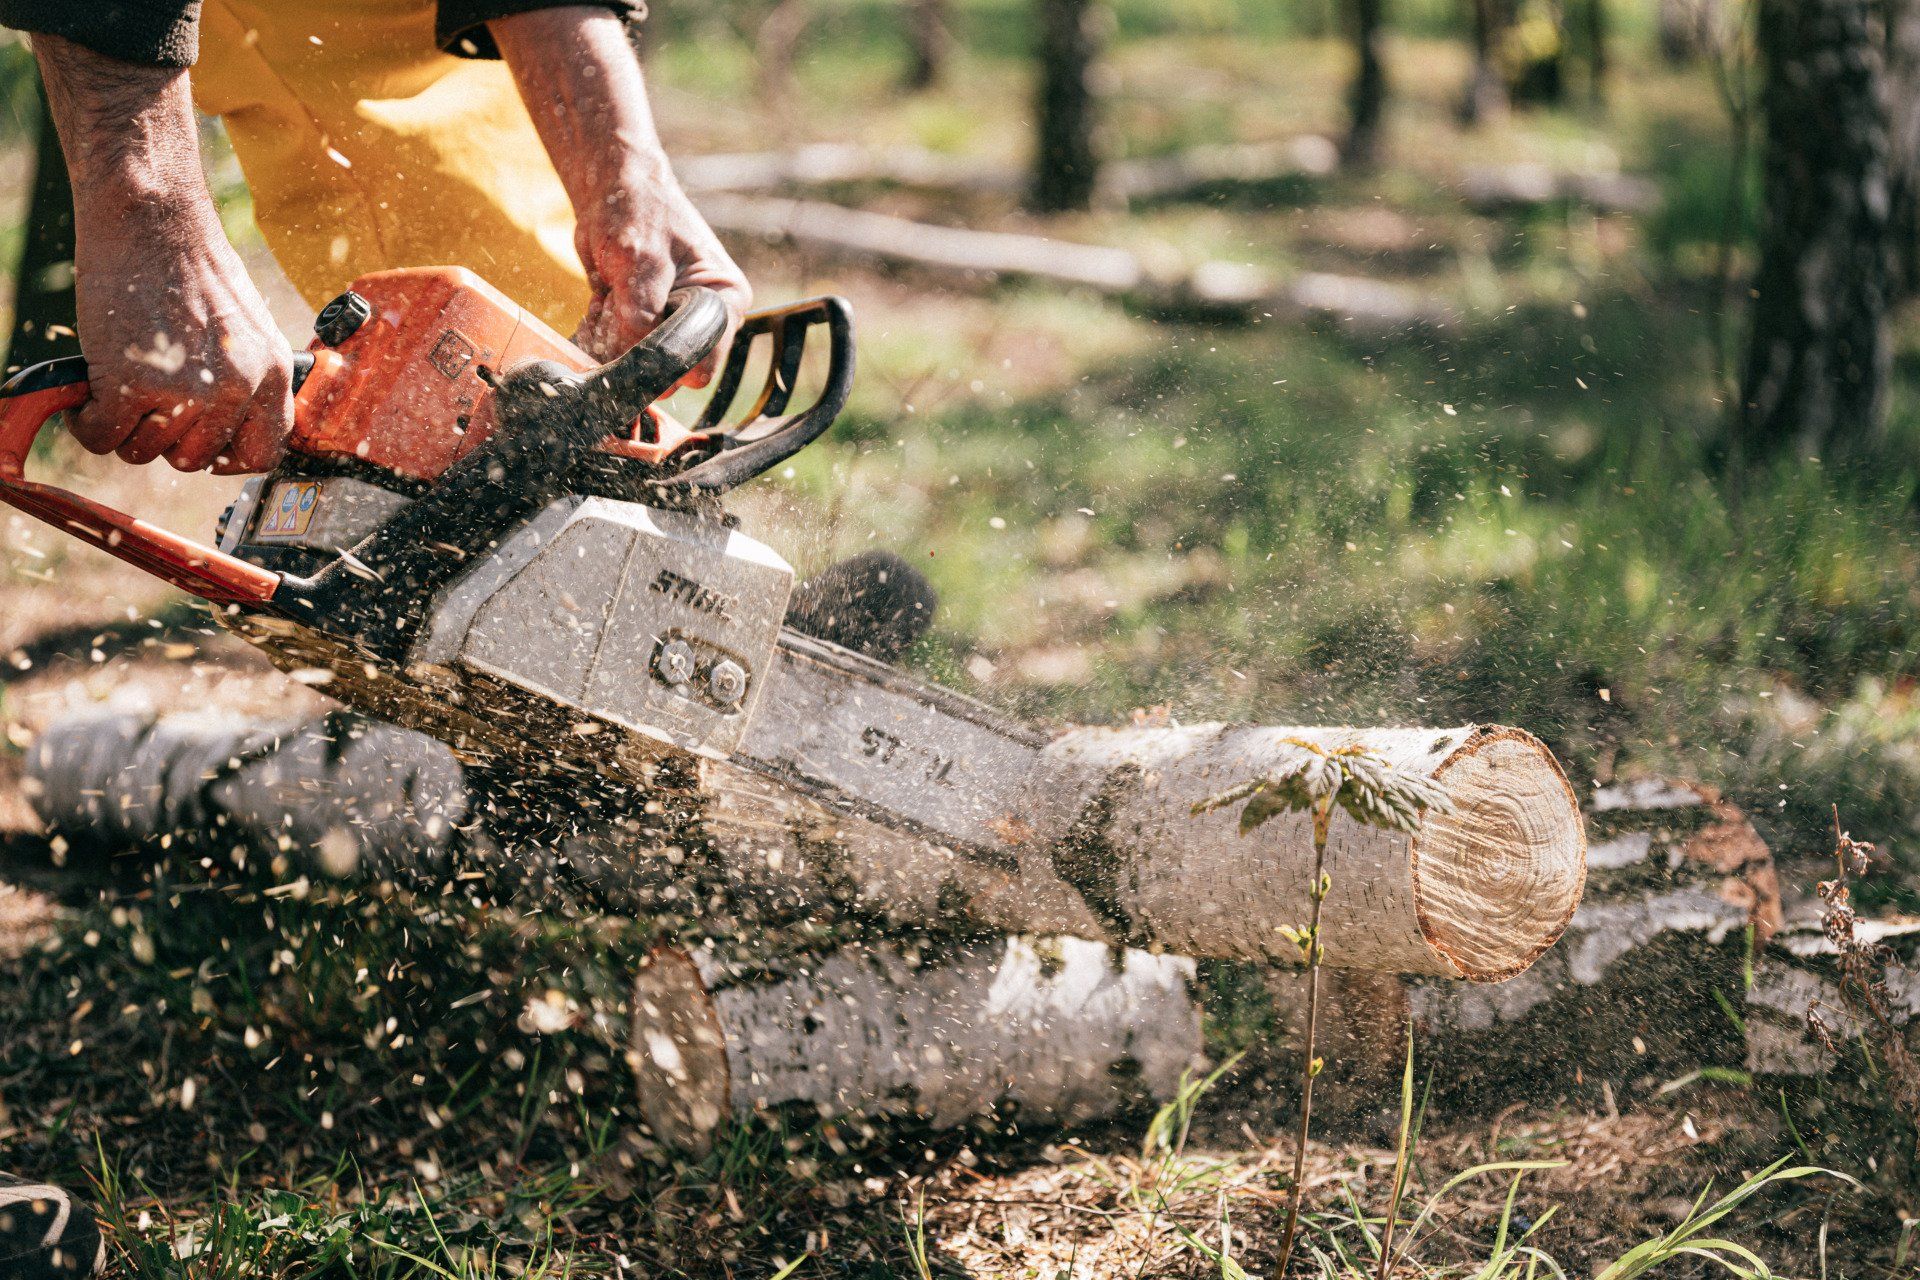 Perth Arborist providing Tree Services